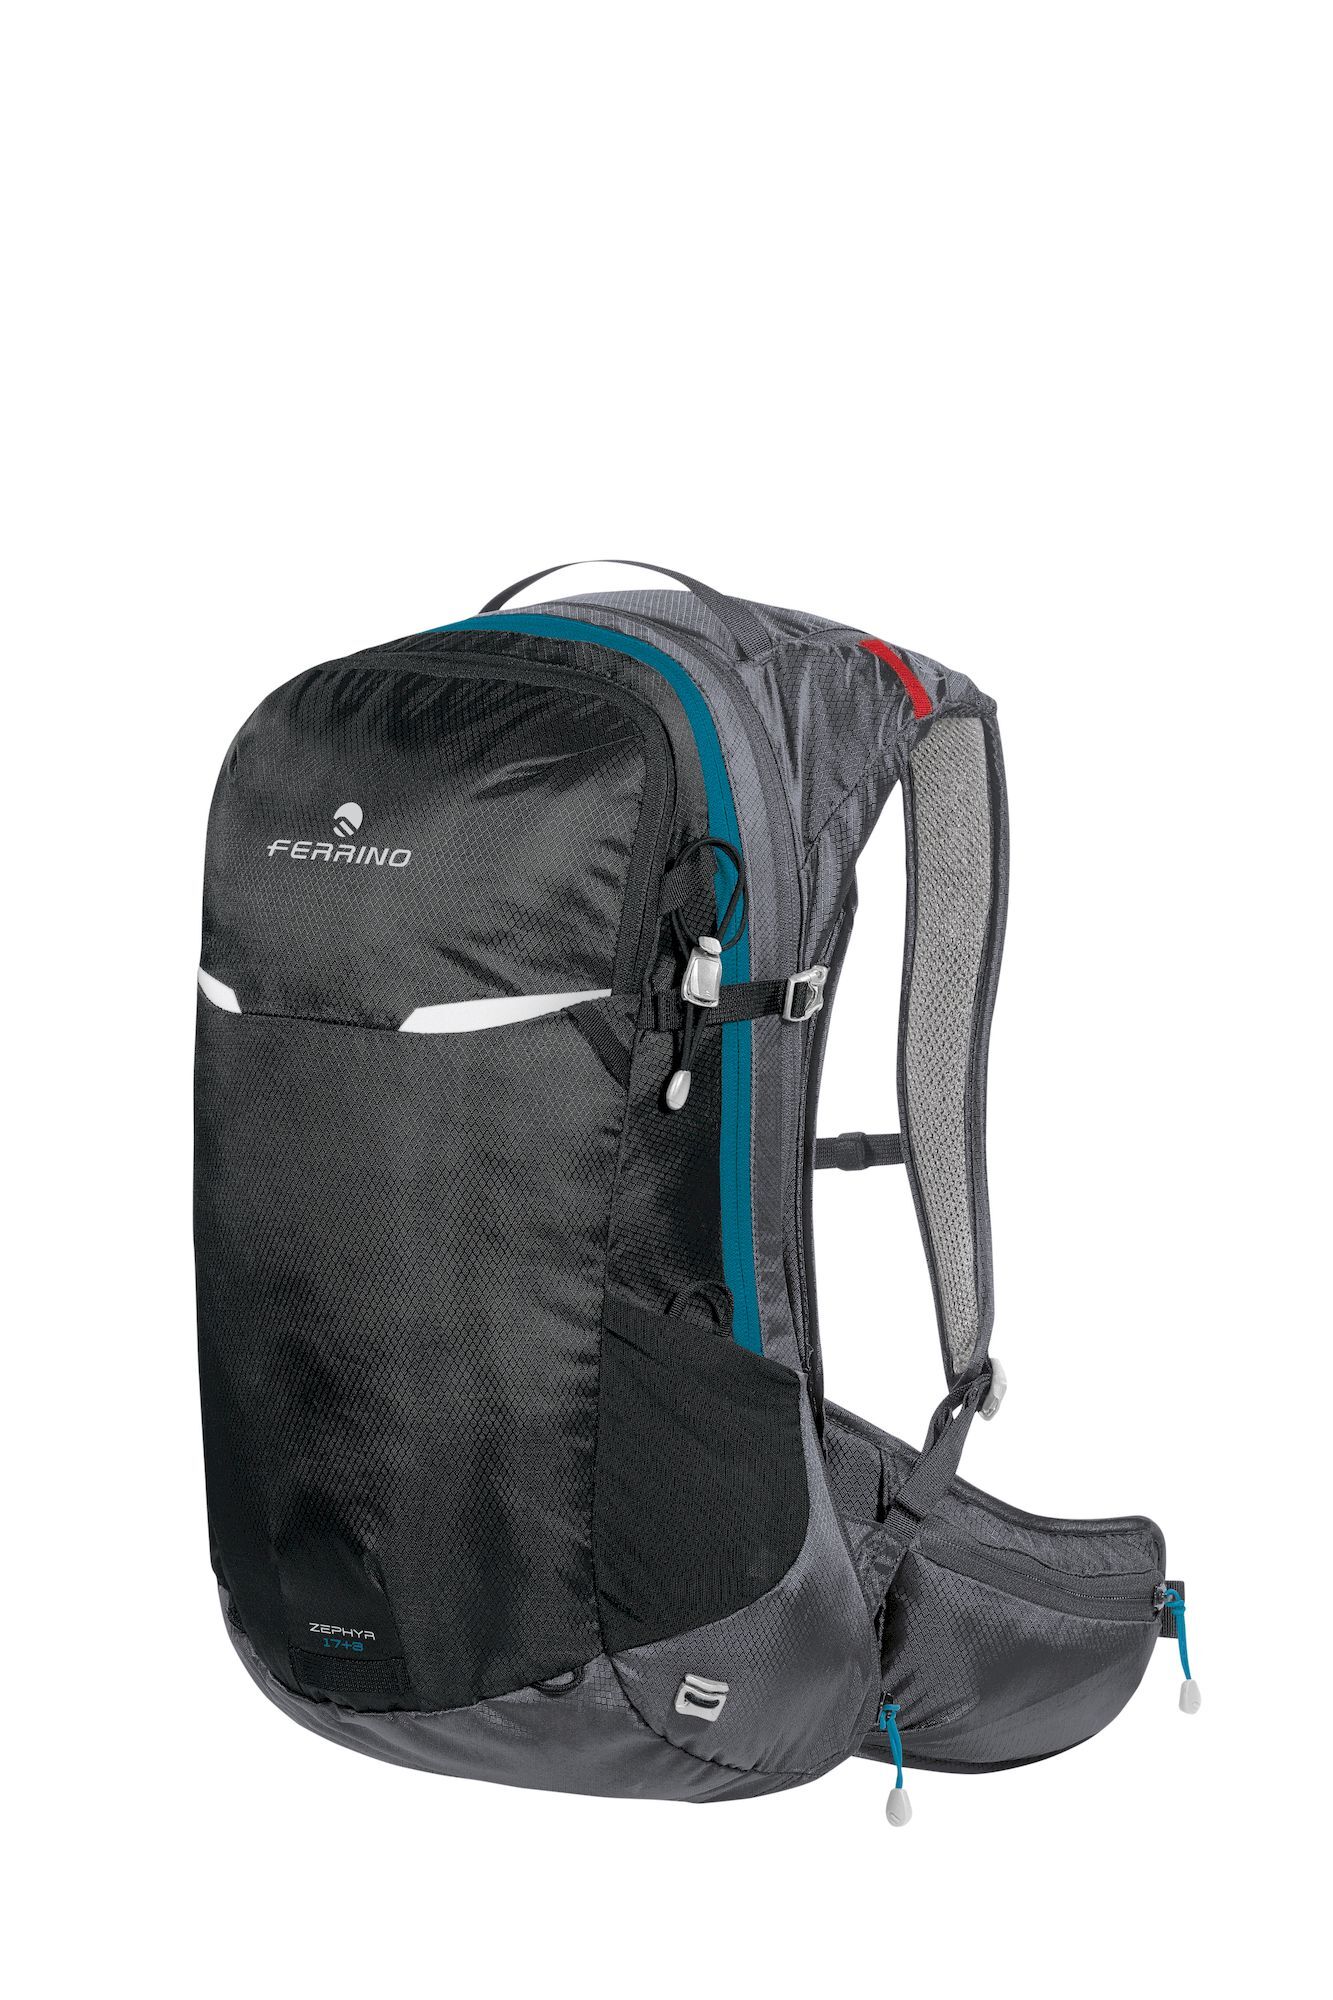 Ferrino Zephyr 17+3 - Hiking backpack